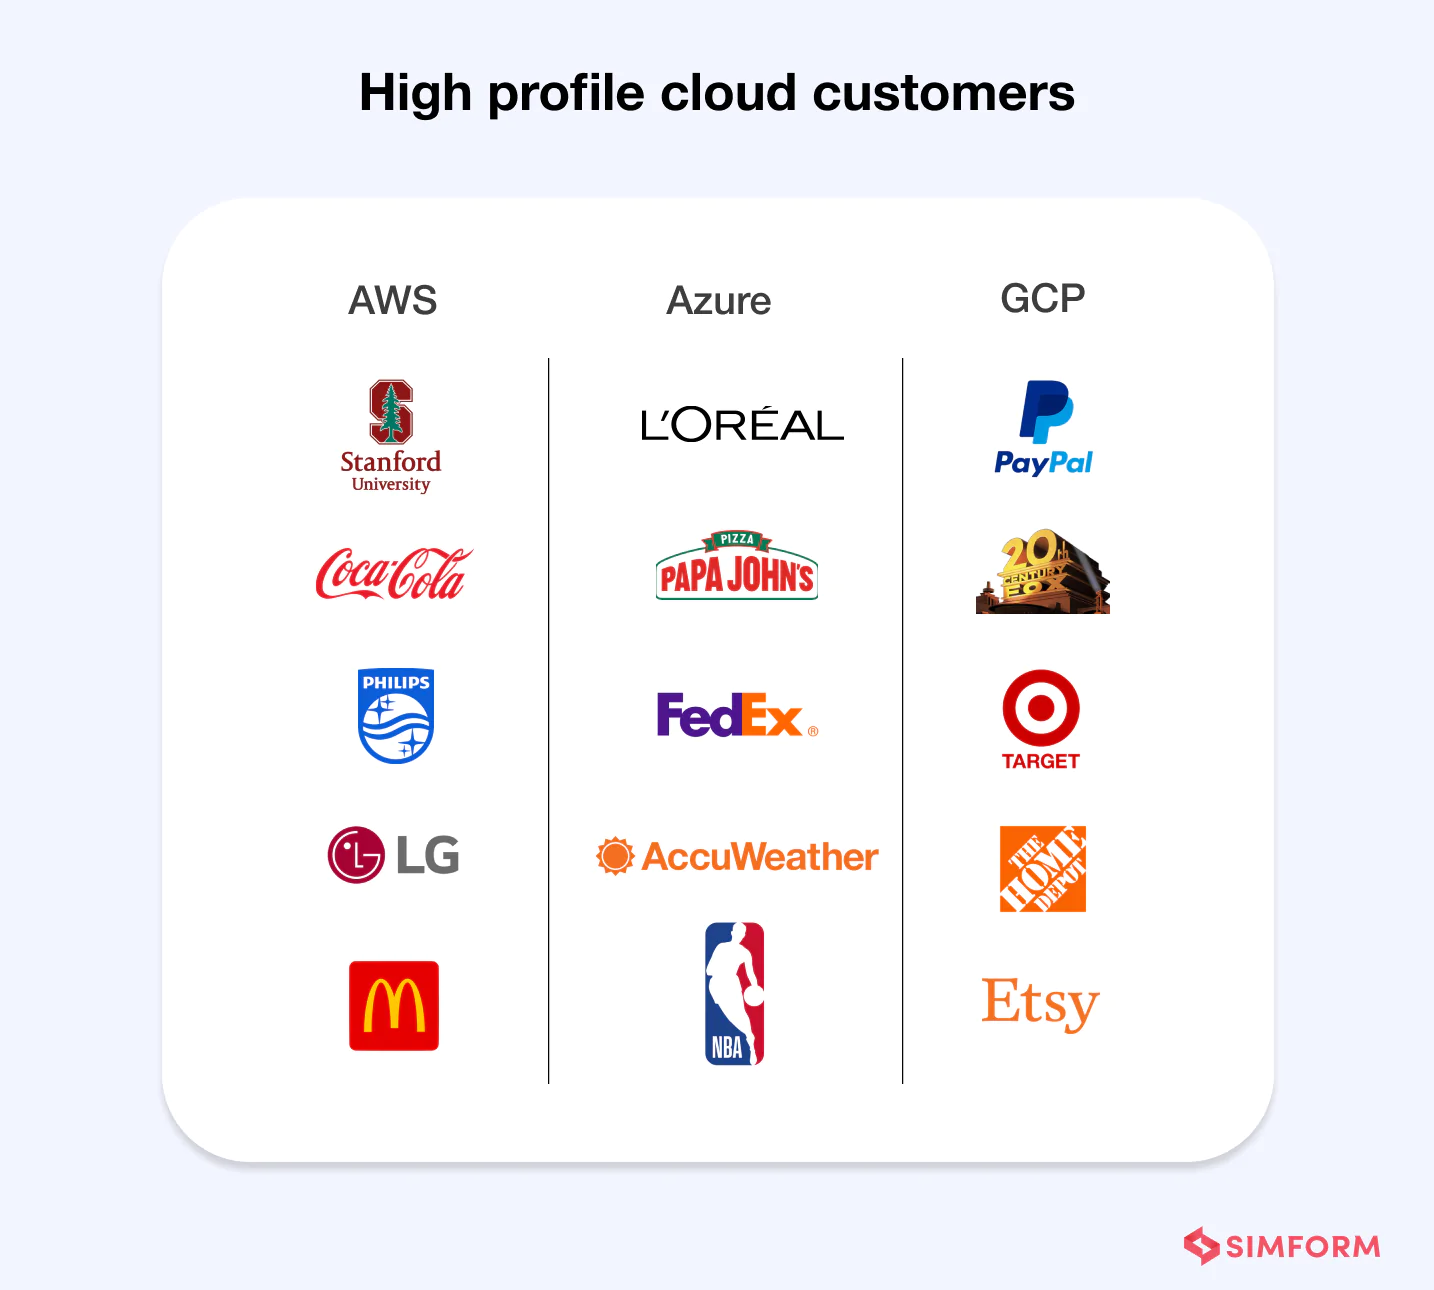 Cloud customers